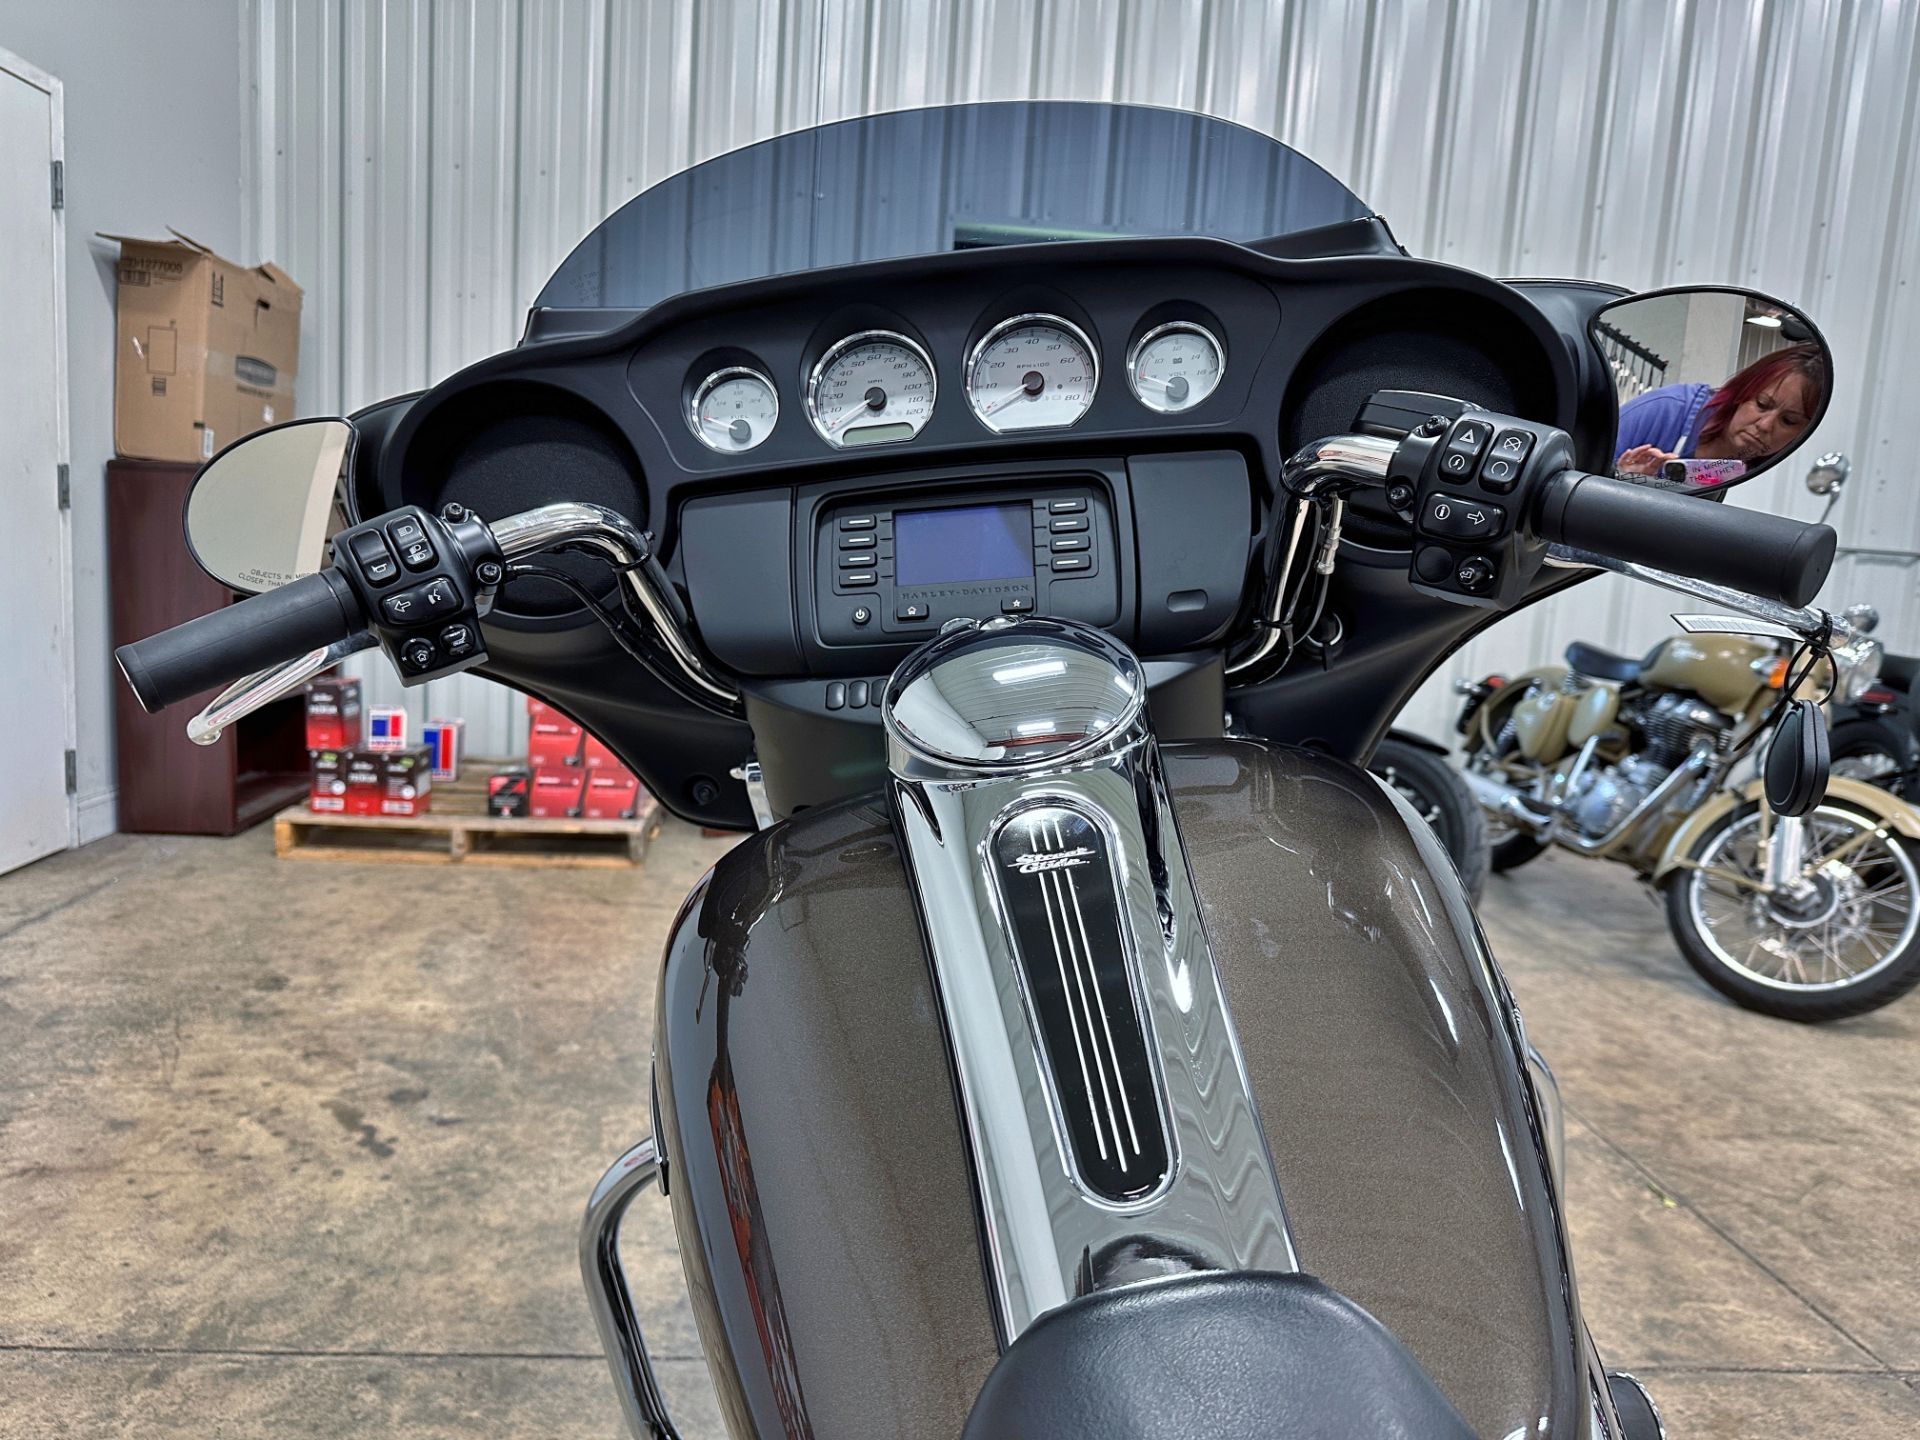 2021 Harley-Davidson Street Glide® in Sandusky, Ohio - Photo 11